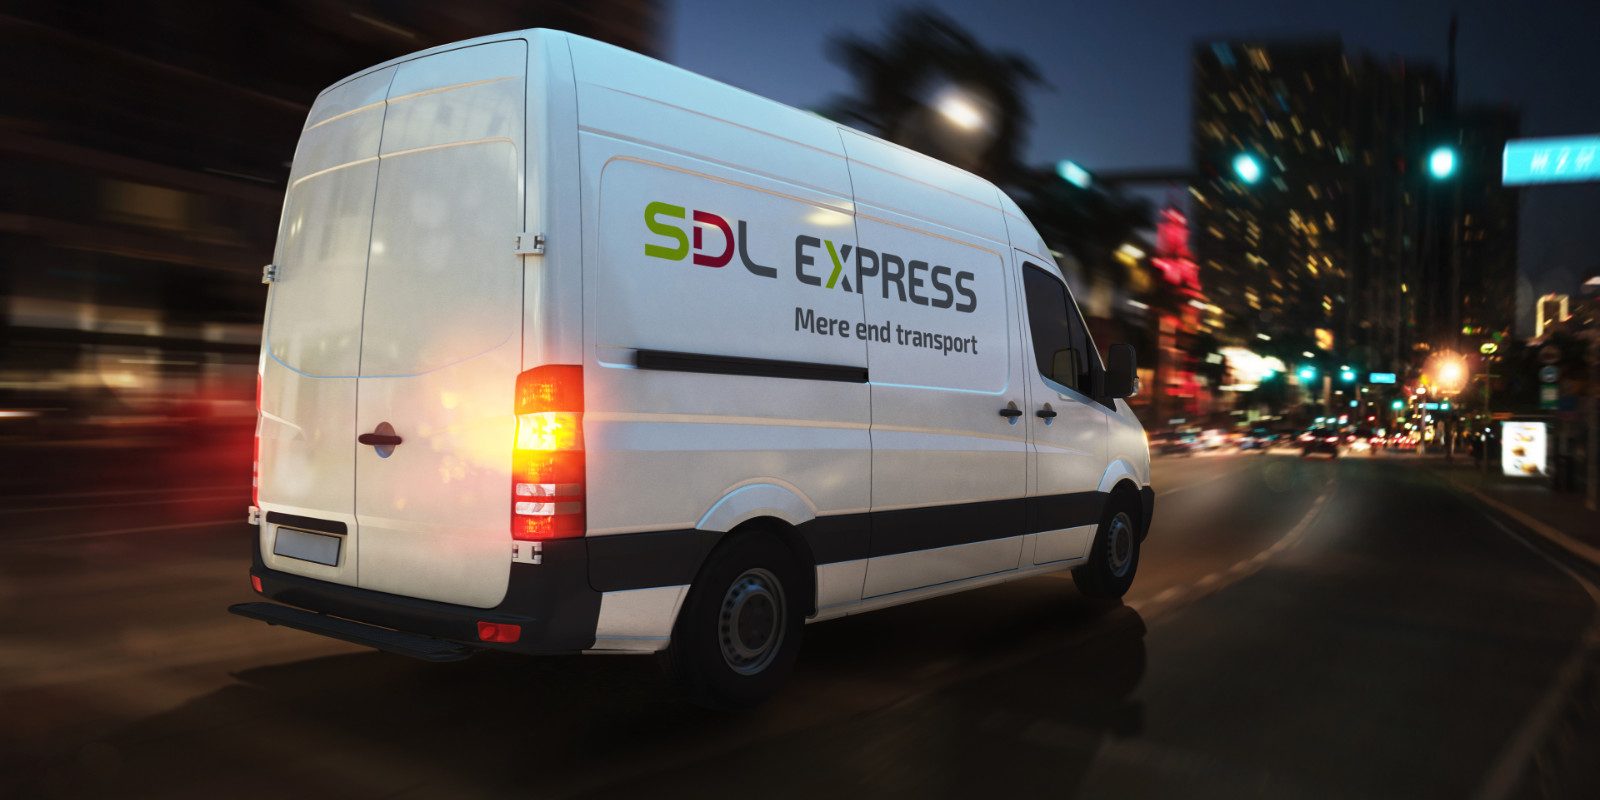 SDL Express